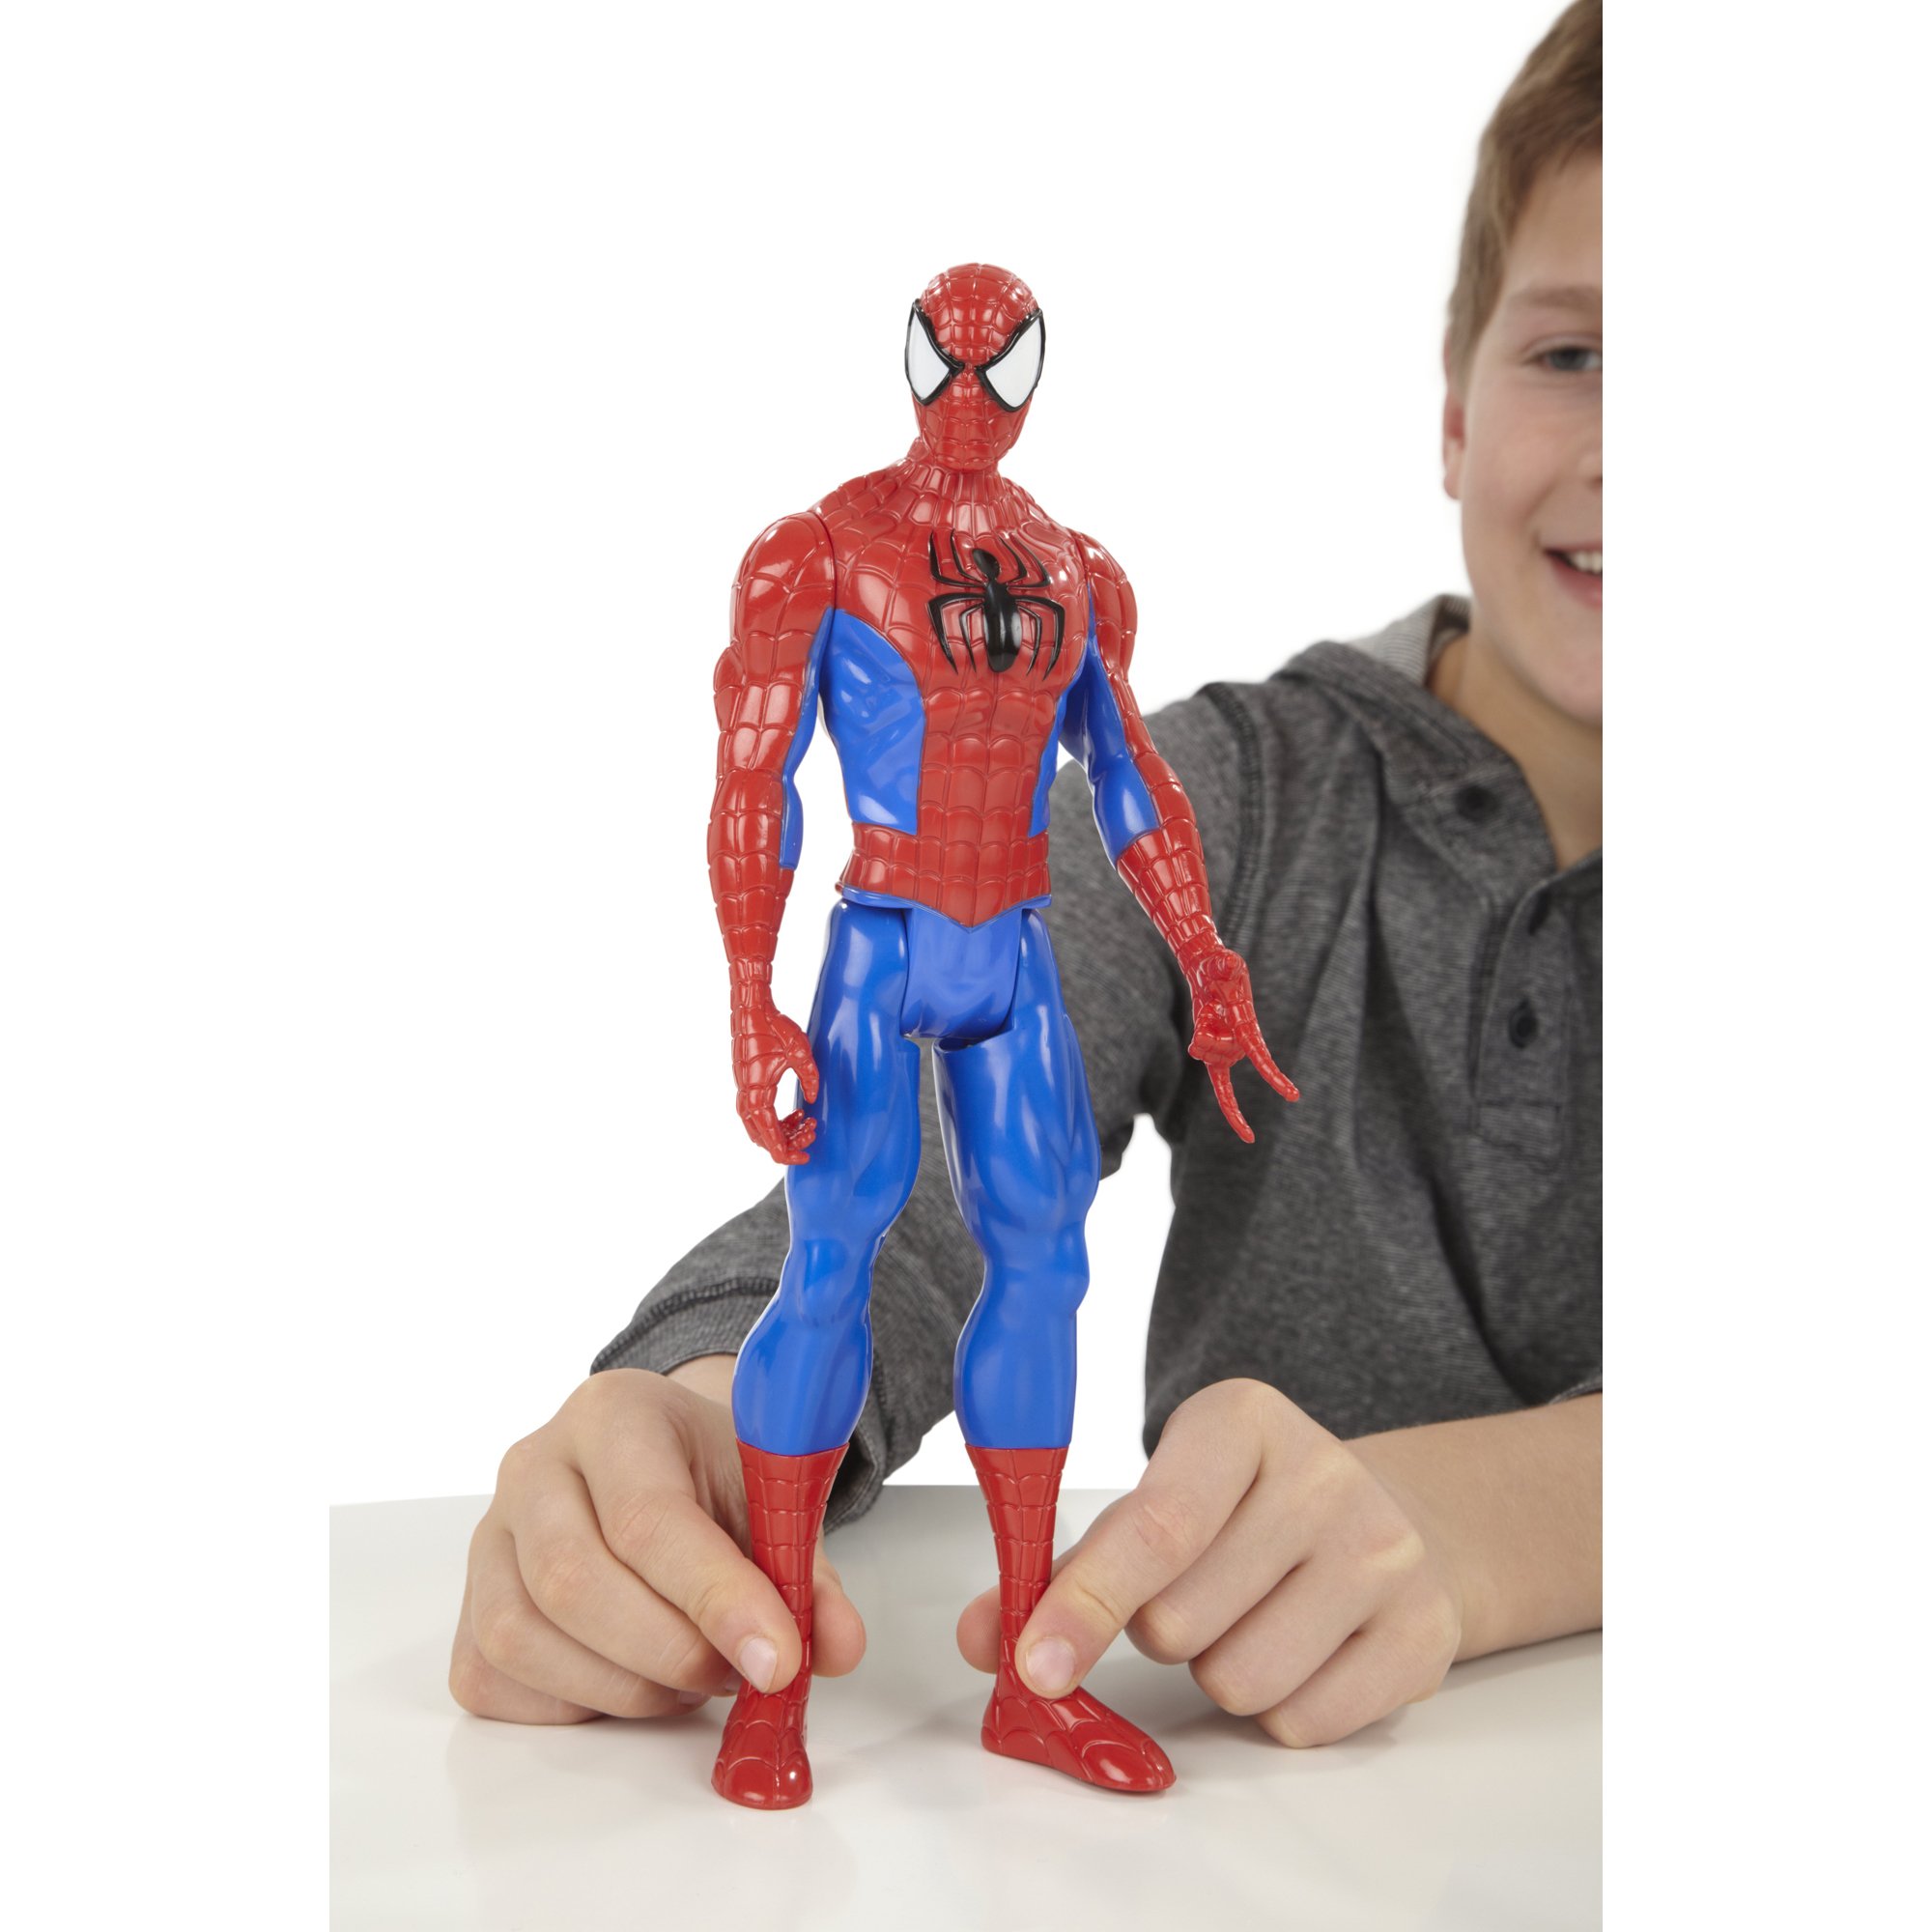 Hasbro Marvel Ultimate Spider-man Titan Hero Series Spider-man Figure, 12-Inch